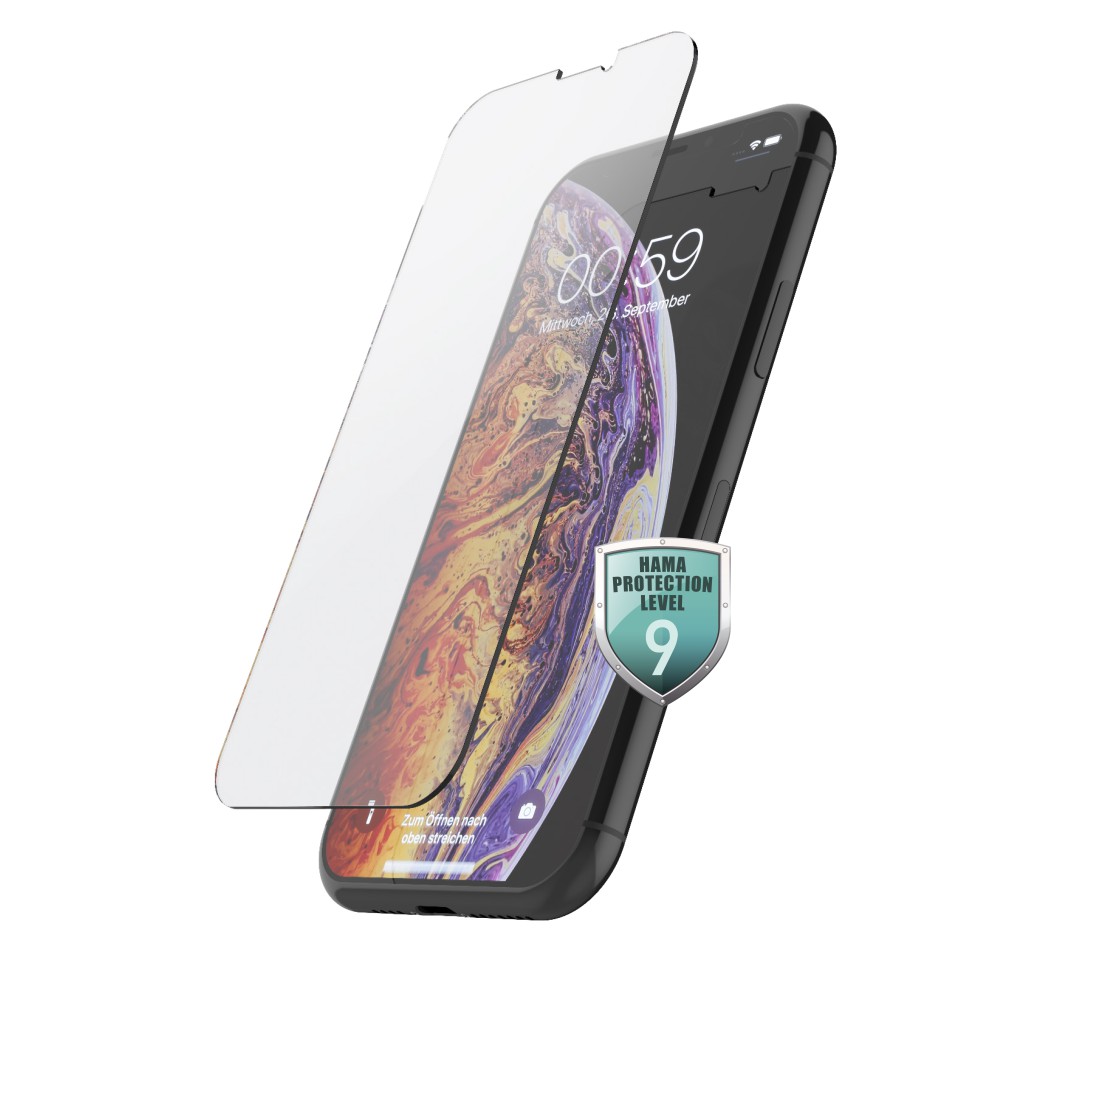 Hama Echtglas-Displayschutz Premium Crystal Glass für Apple iPhone X/XS/11 Pro